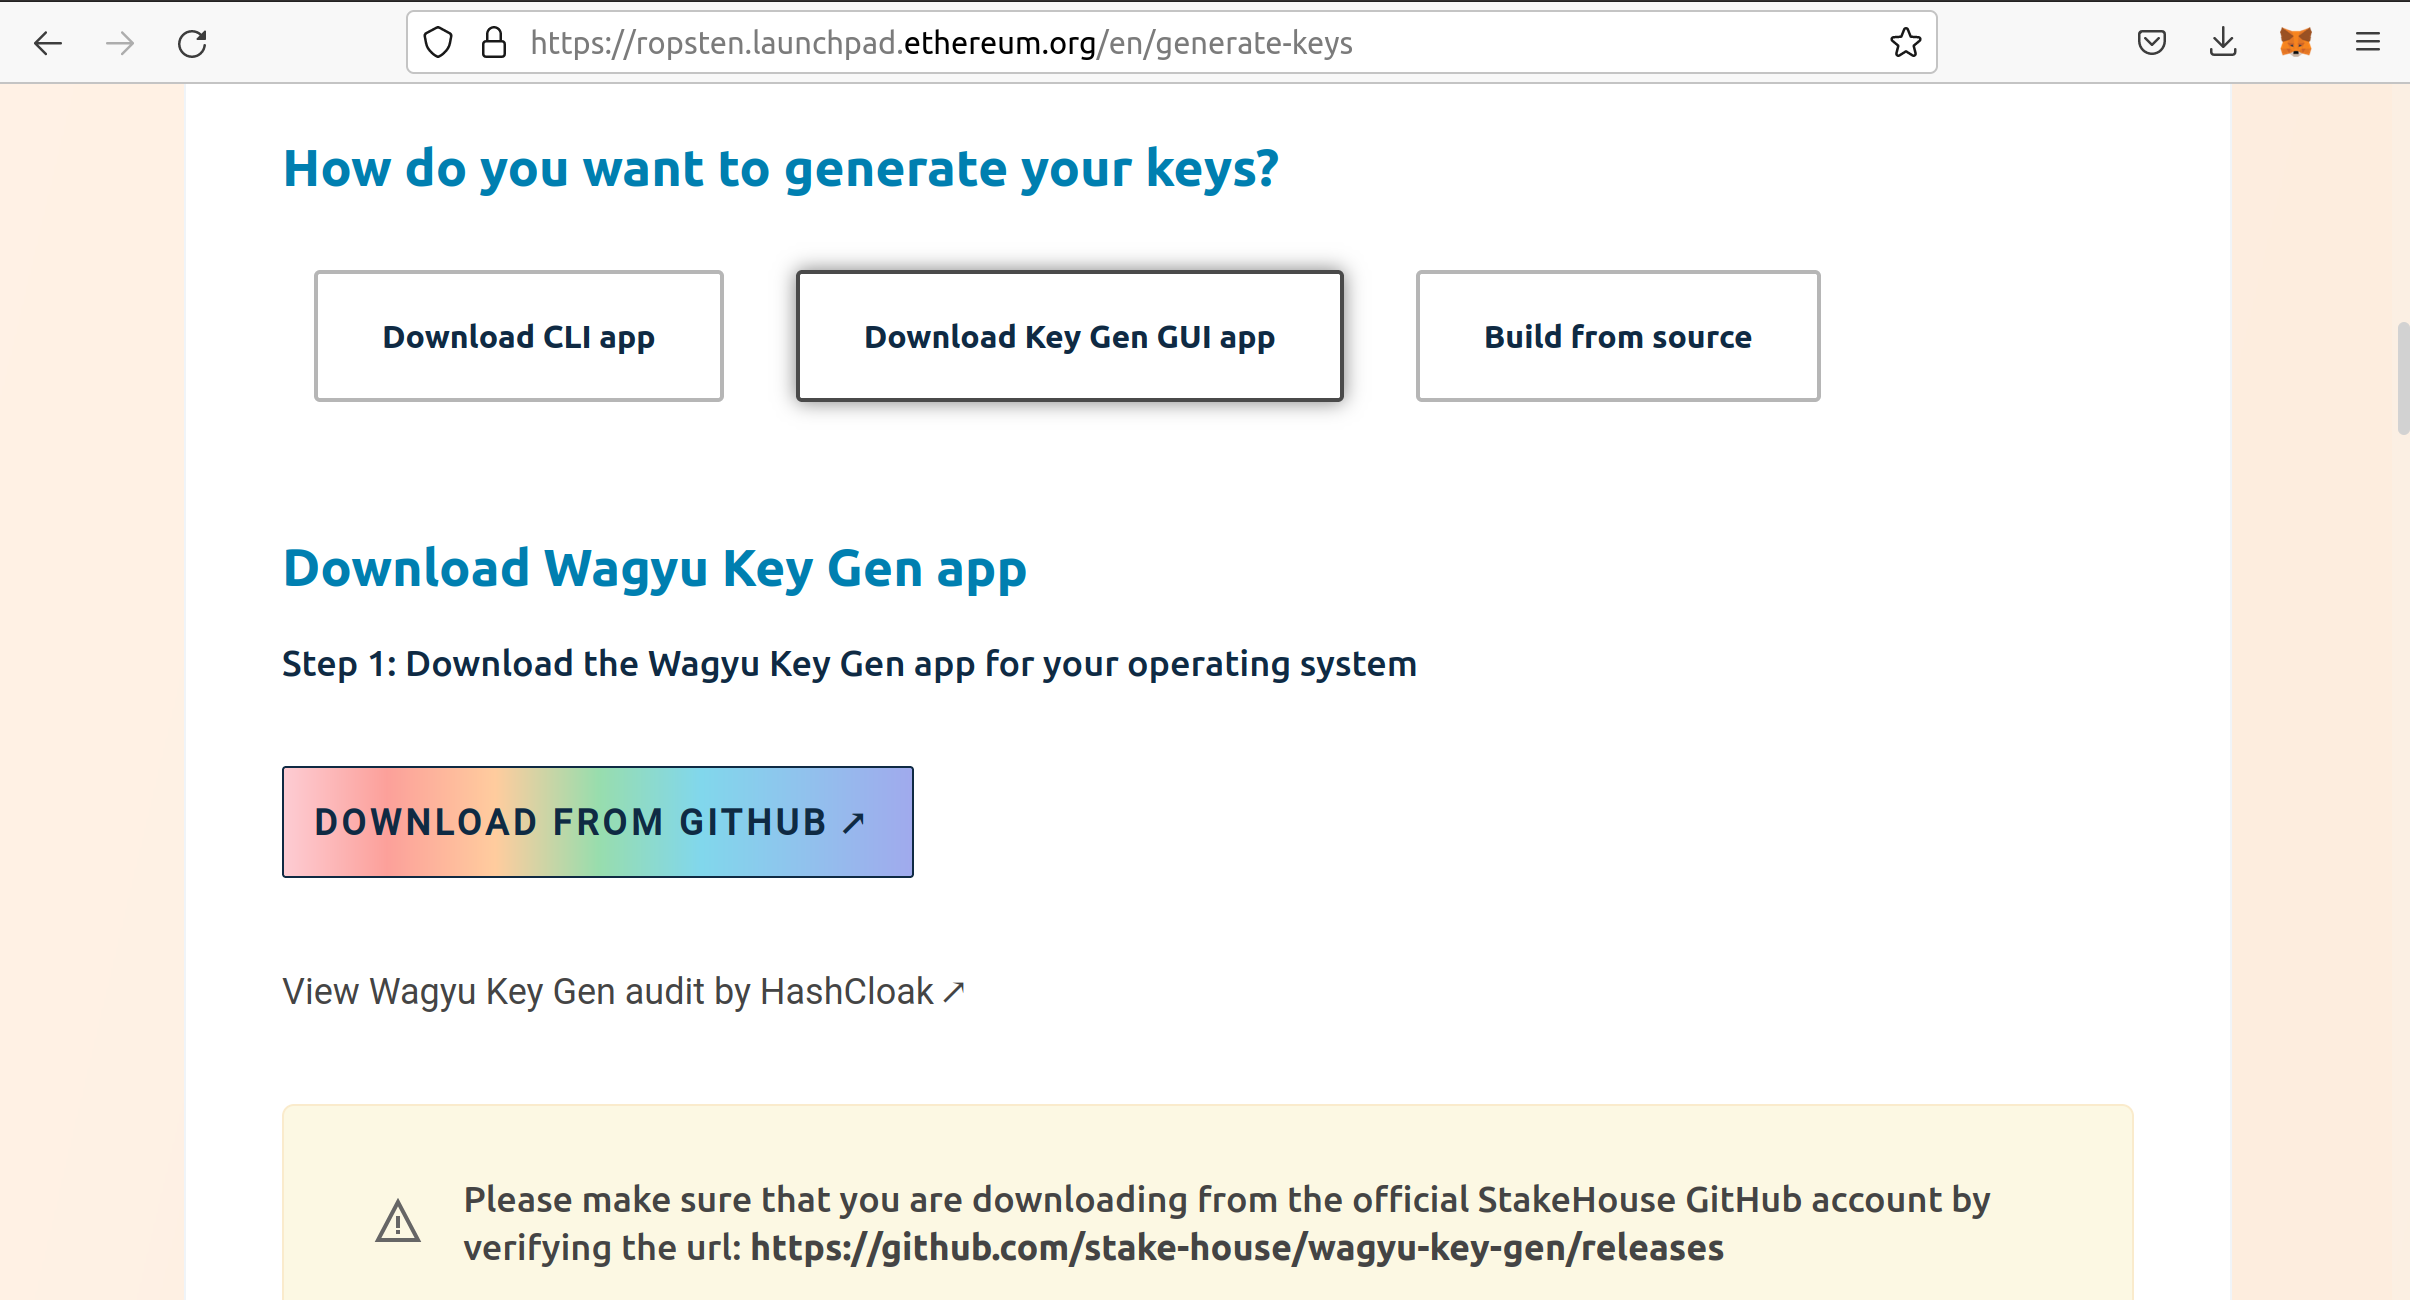 Choose the Download Key Gen GUI app option